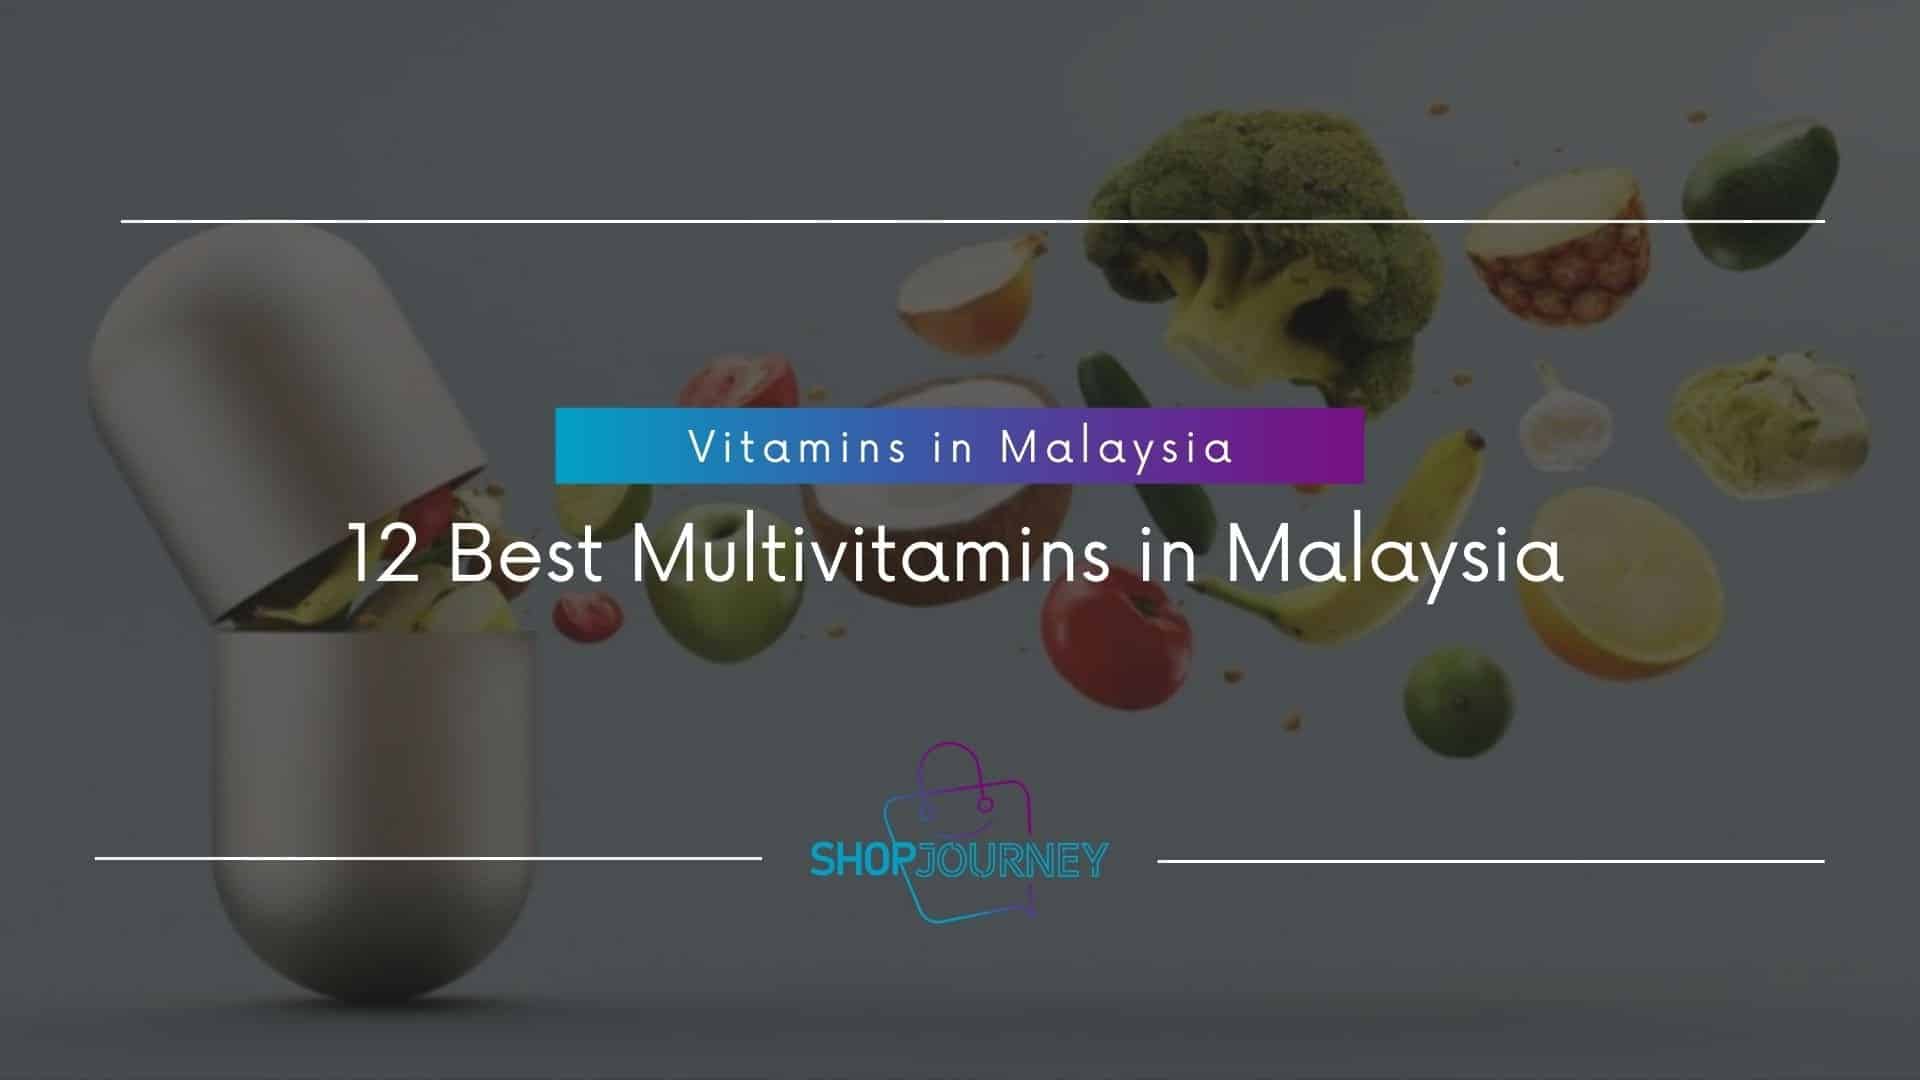 12 best multivitamins in Malaysia.